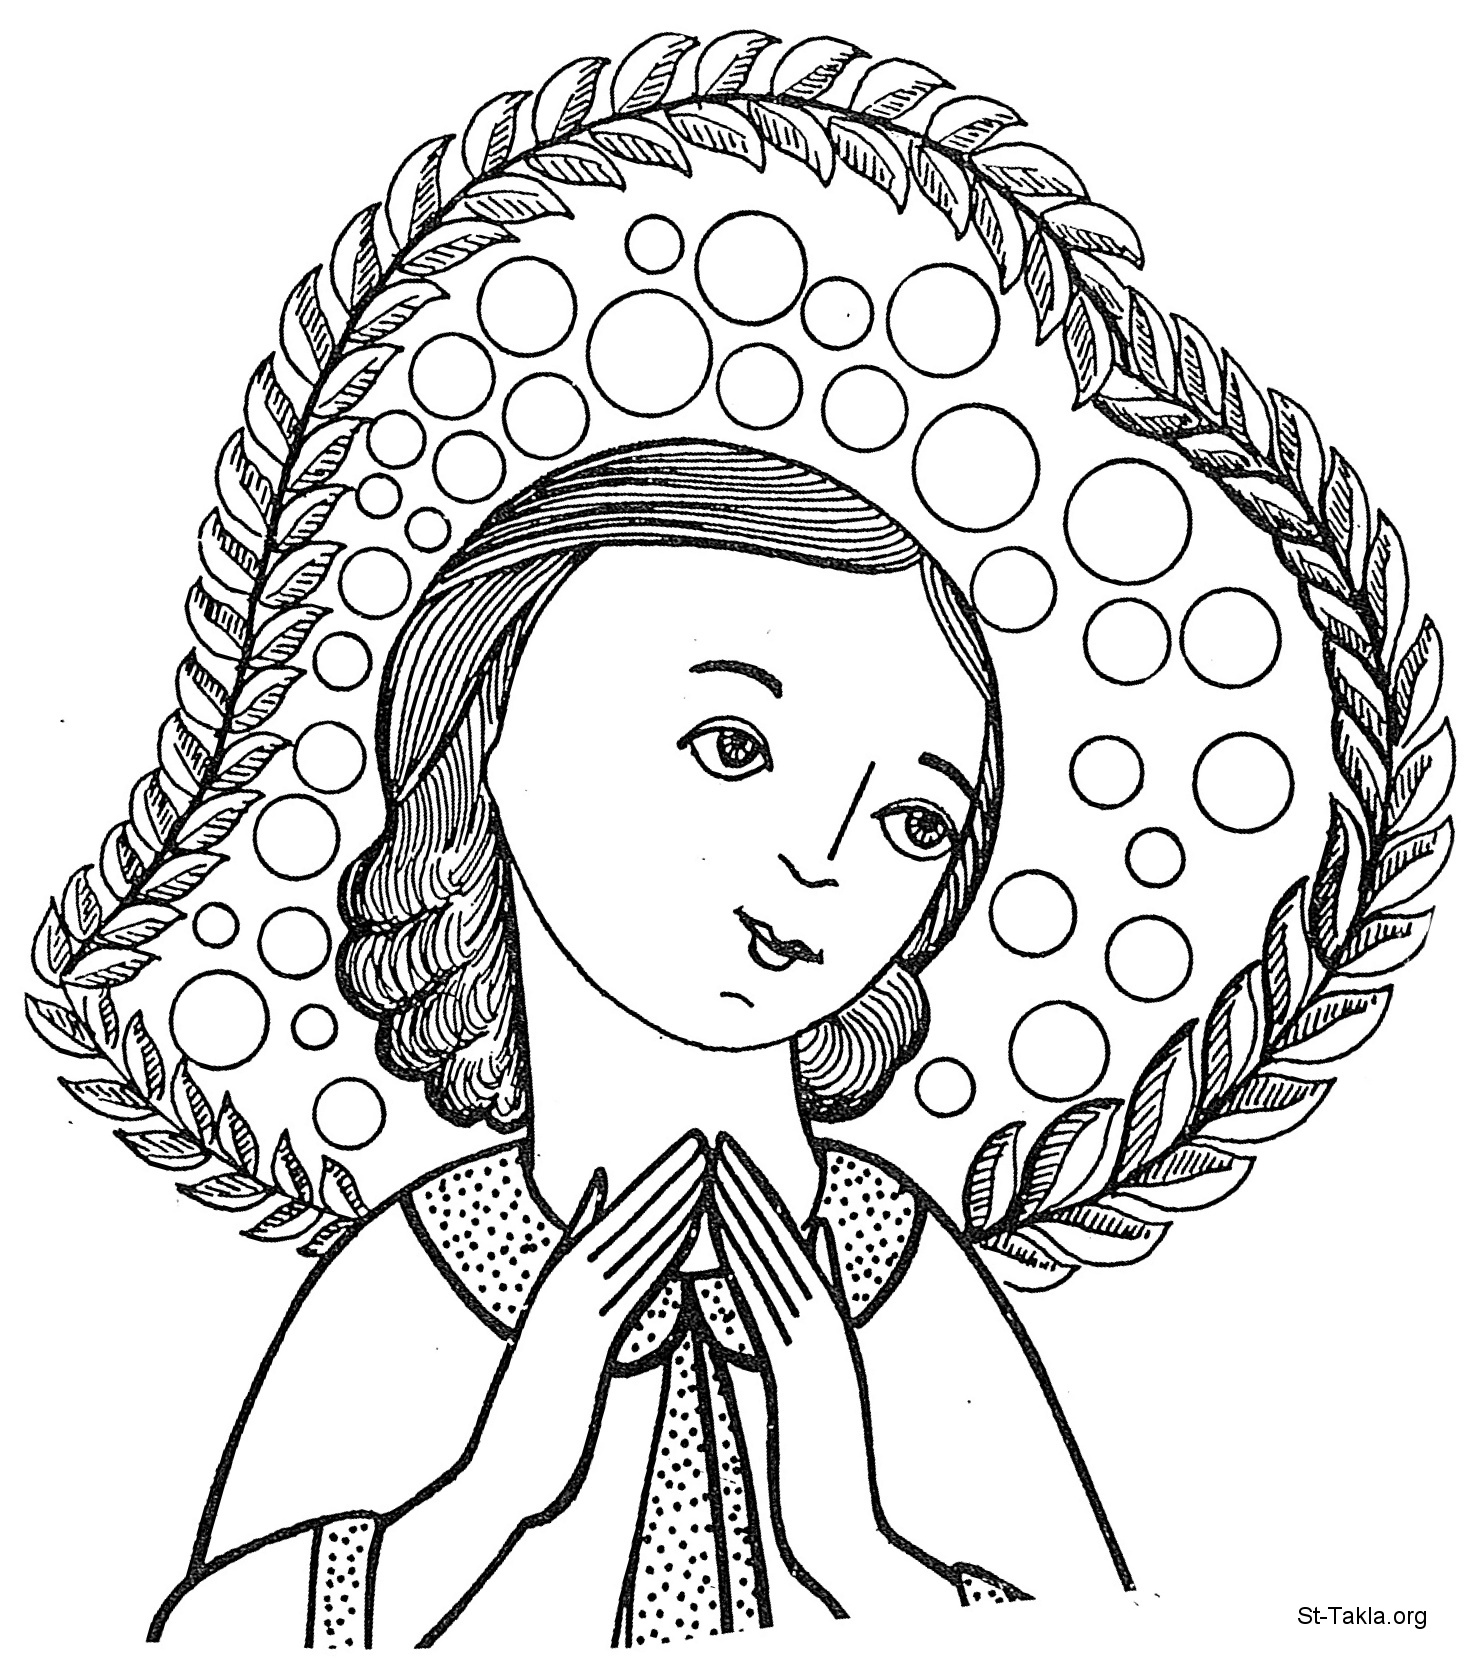 St-Takla.org Image: A girl praying, happy woman, Coptic art     :   ɡ ʡ  ɡ  